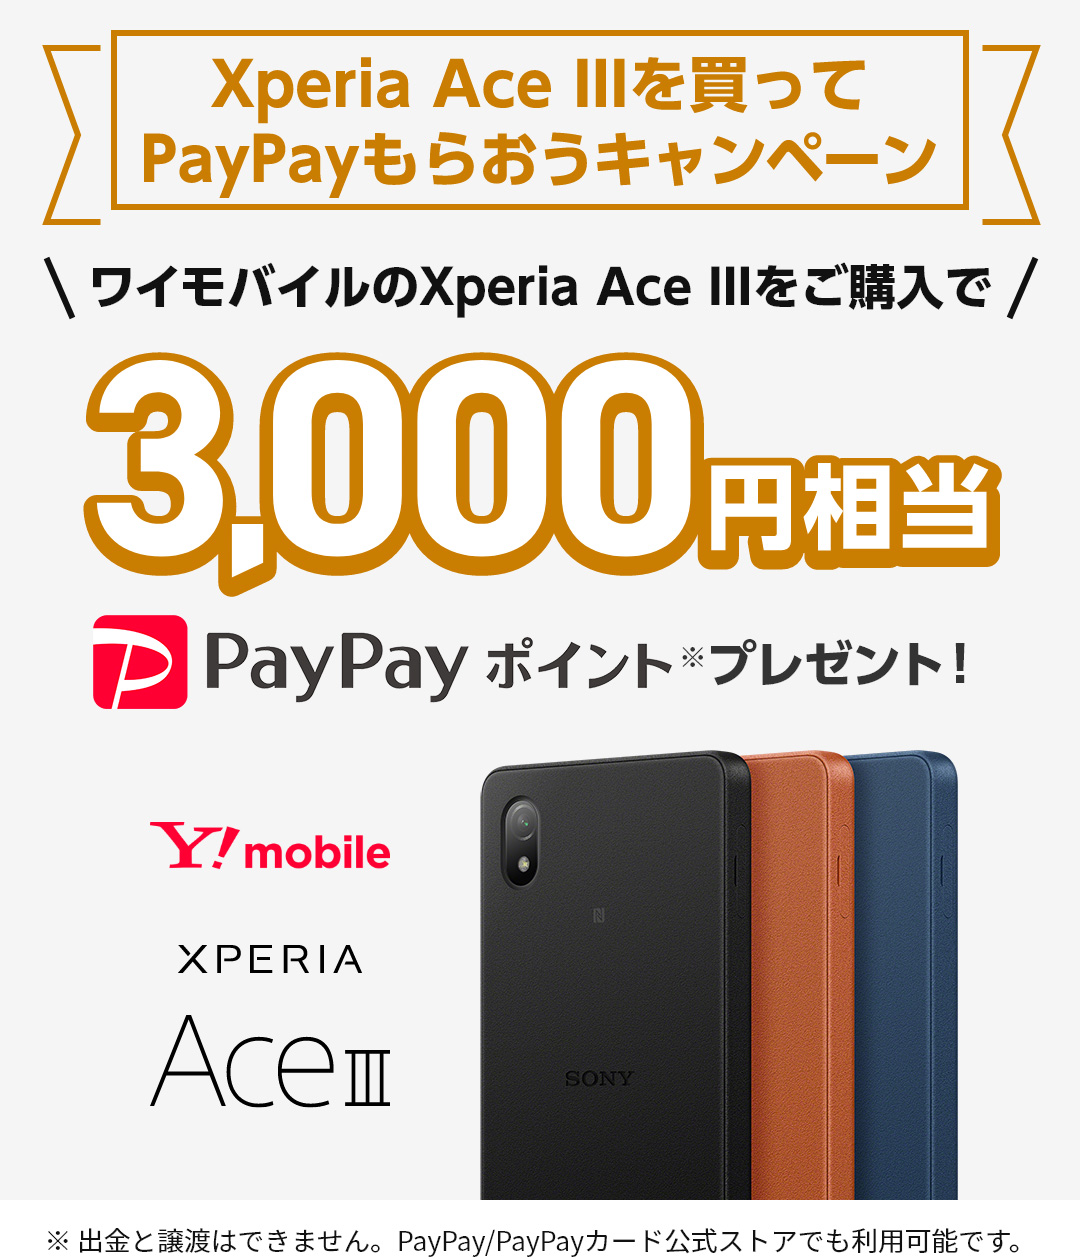 Y!mobile Xperia Ace IIIを買ってPayPayもらおうキャンペーン ワイモバイルのXperia Ace IIIをご購入で3,000円相当PayPayポイント※プレゼント！※出金と譲渡はできません。PayPay/PayPayカード公式ストアでも利用可能です。